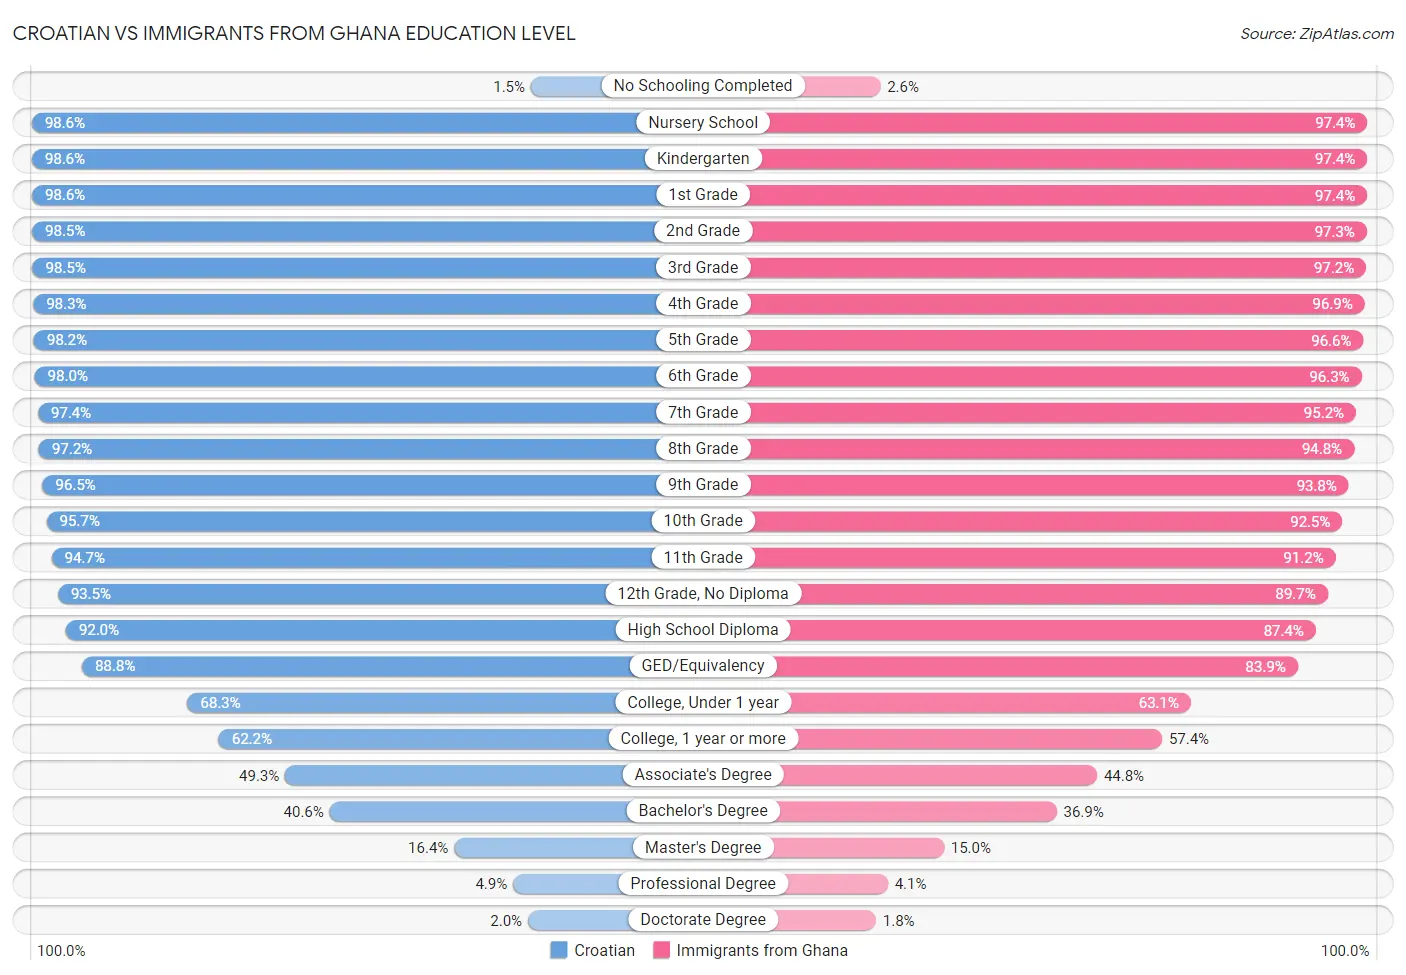 Croatian vs Immigrants from Ghana Education Level